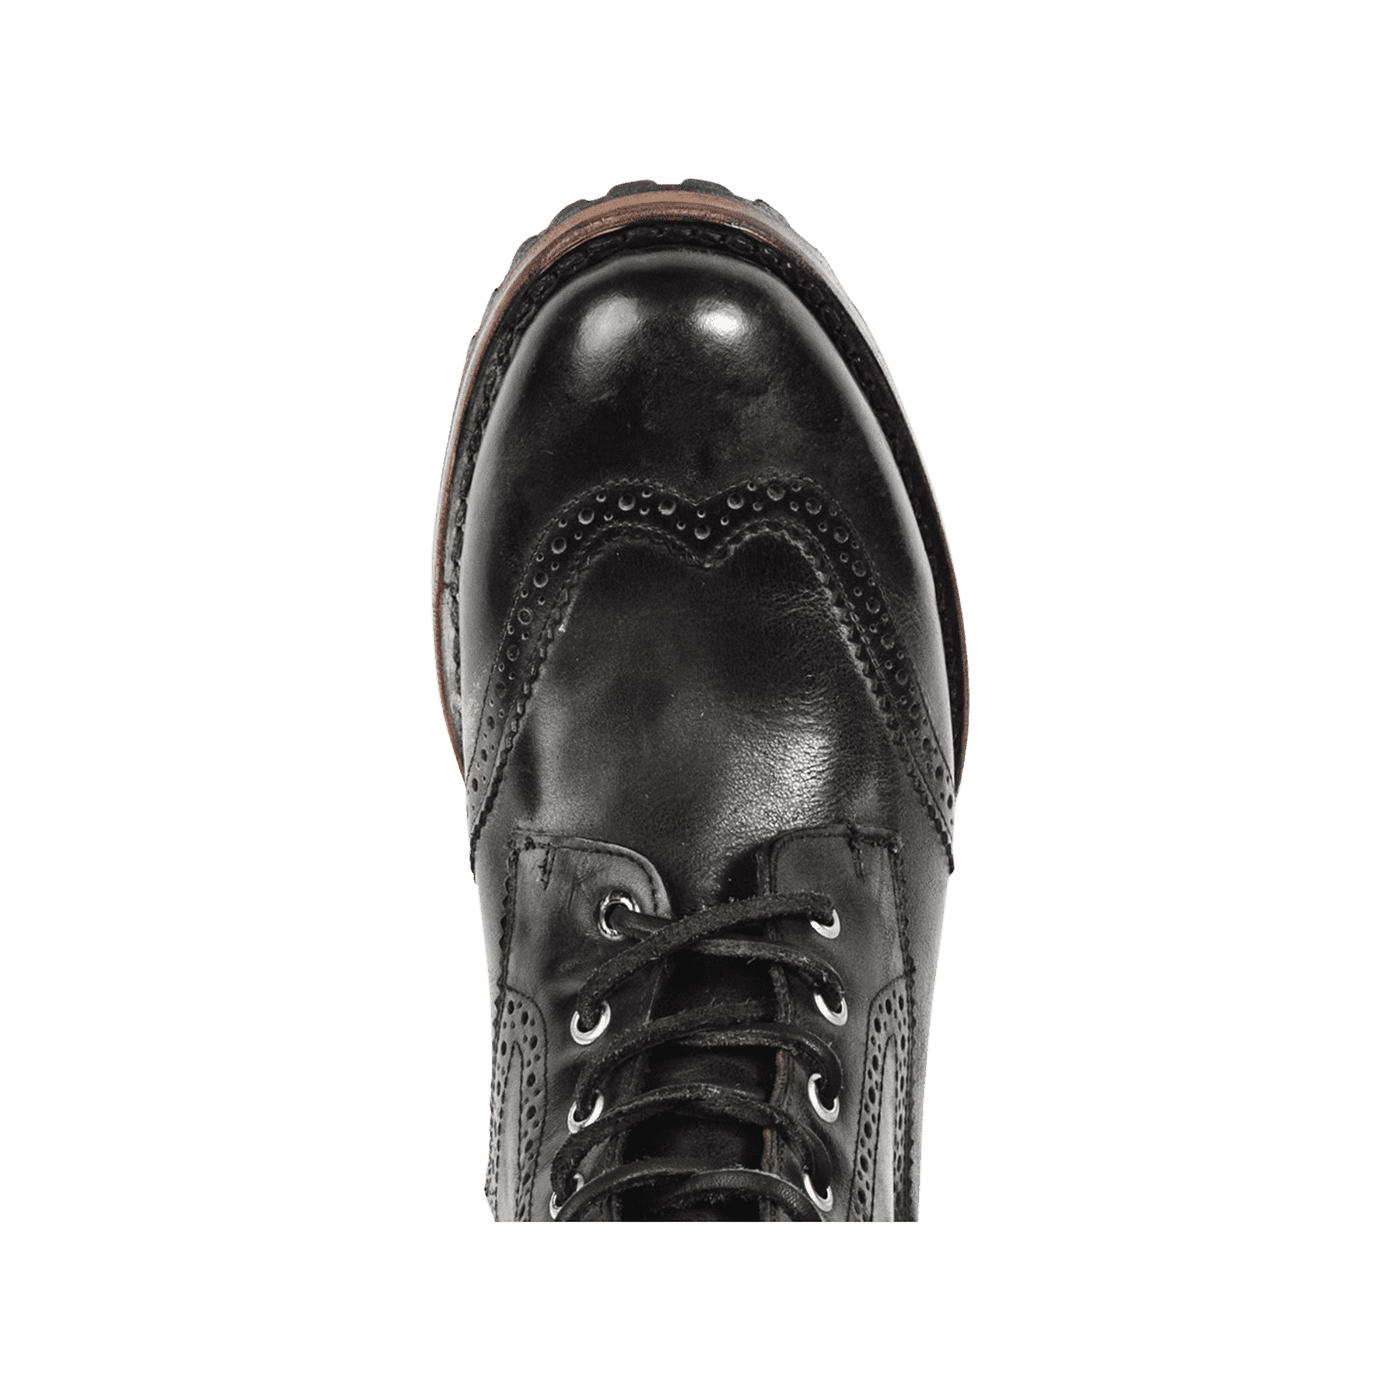 Almond toe with brogue details on FREEBIRD men's Bradford black leather boot